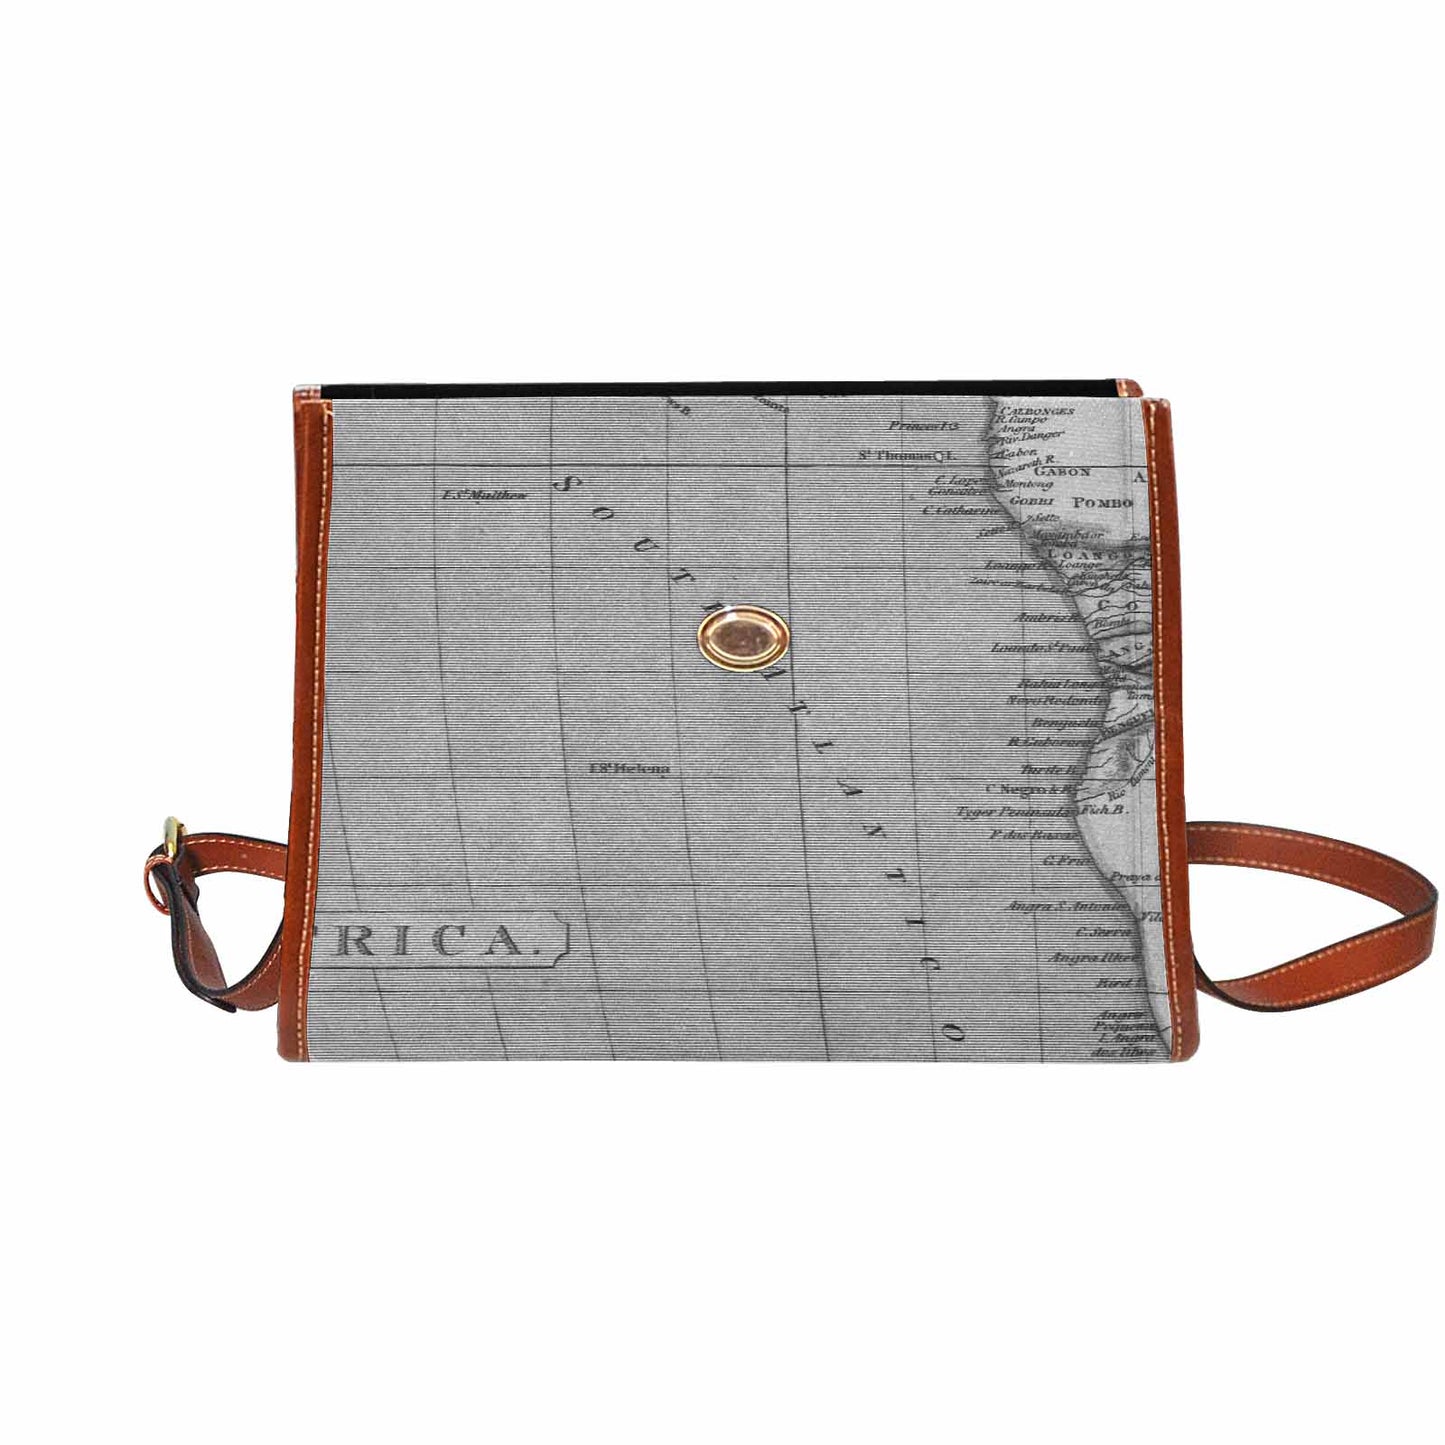 Antique Map Handbag, Model 1695341, Design 02